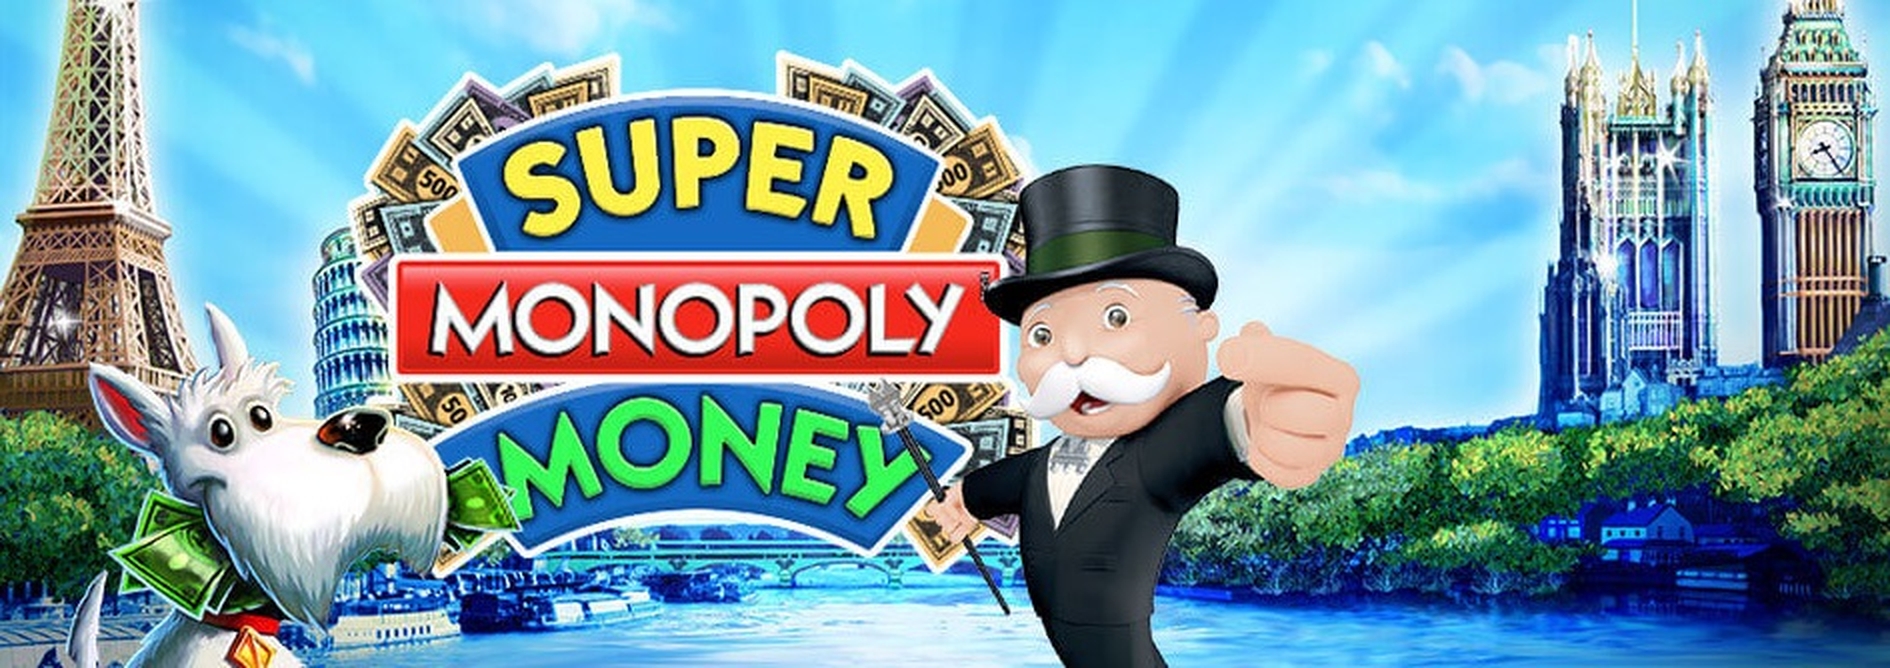 Super MONOPOLY Money demo